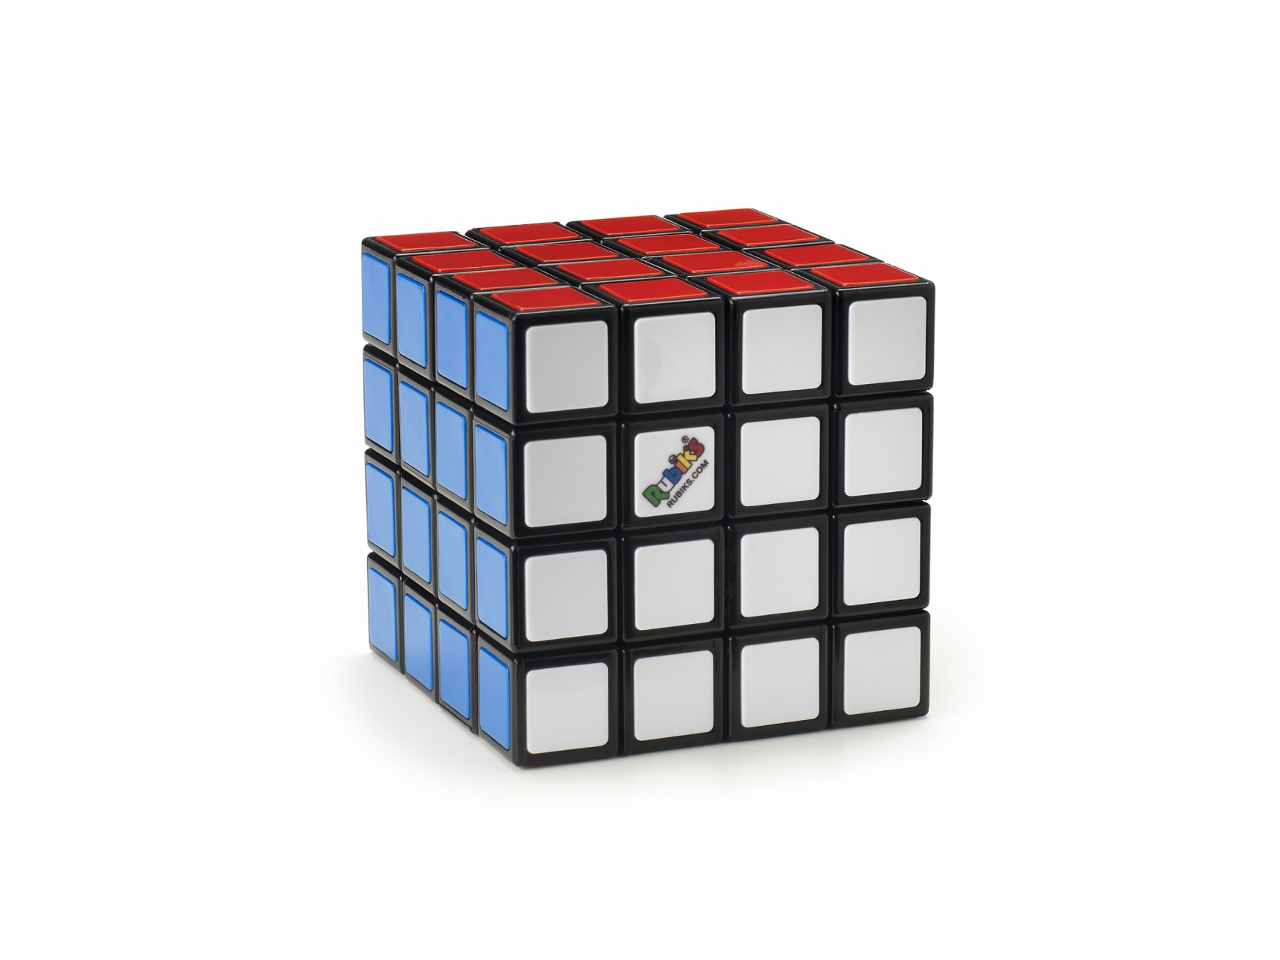 Rubik's il cubo 4x4 challenge